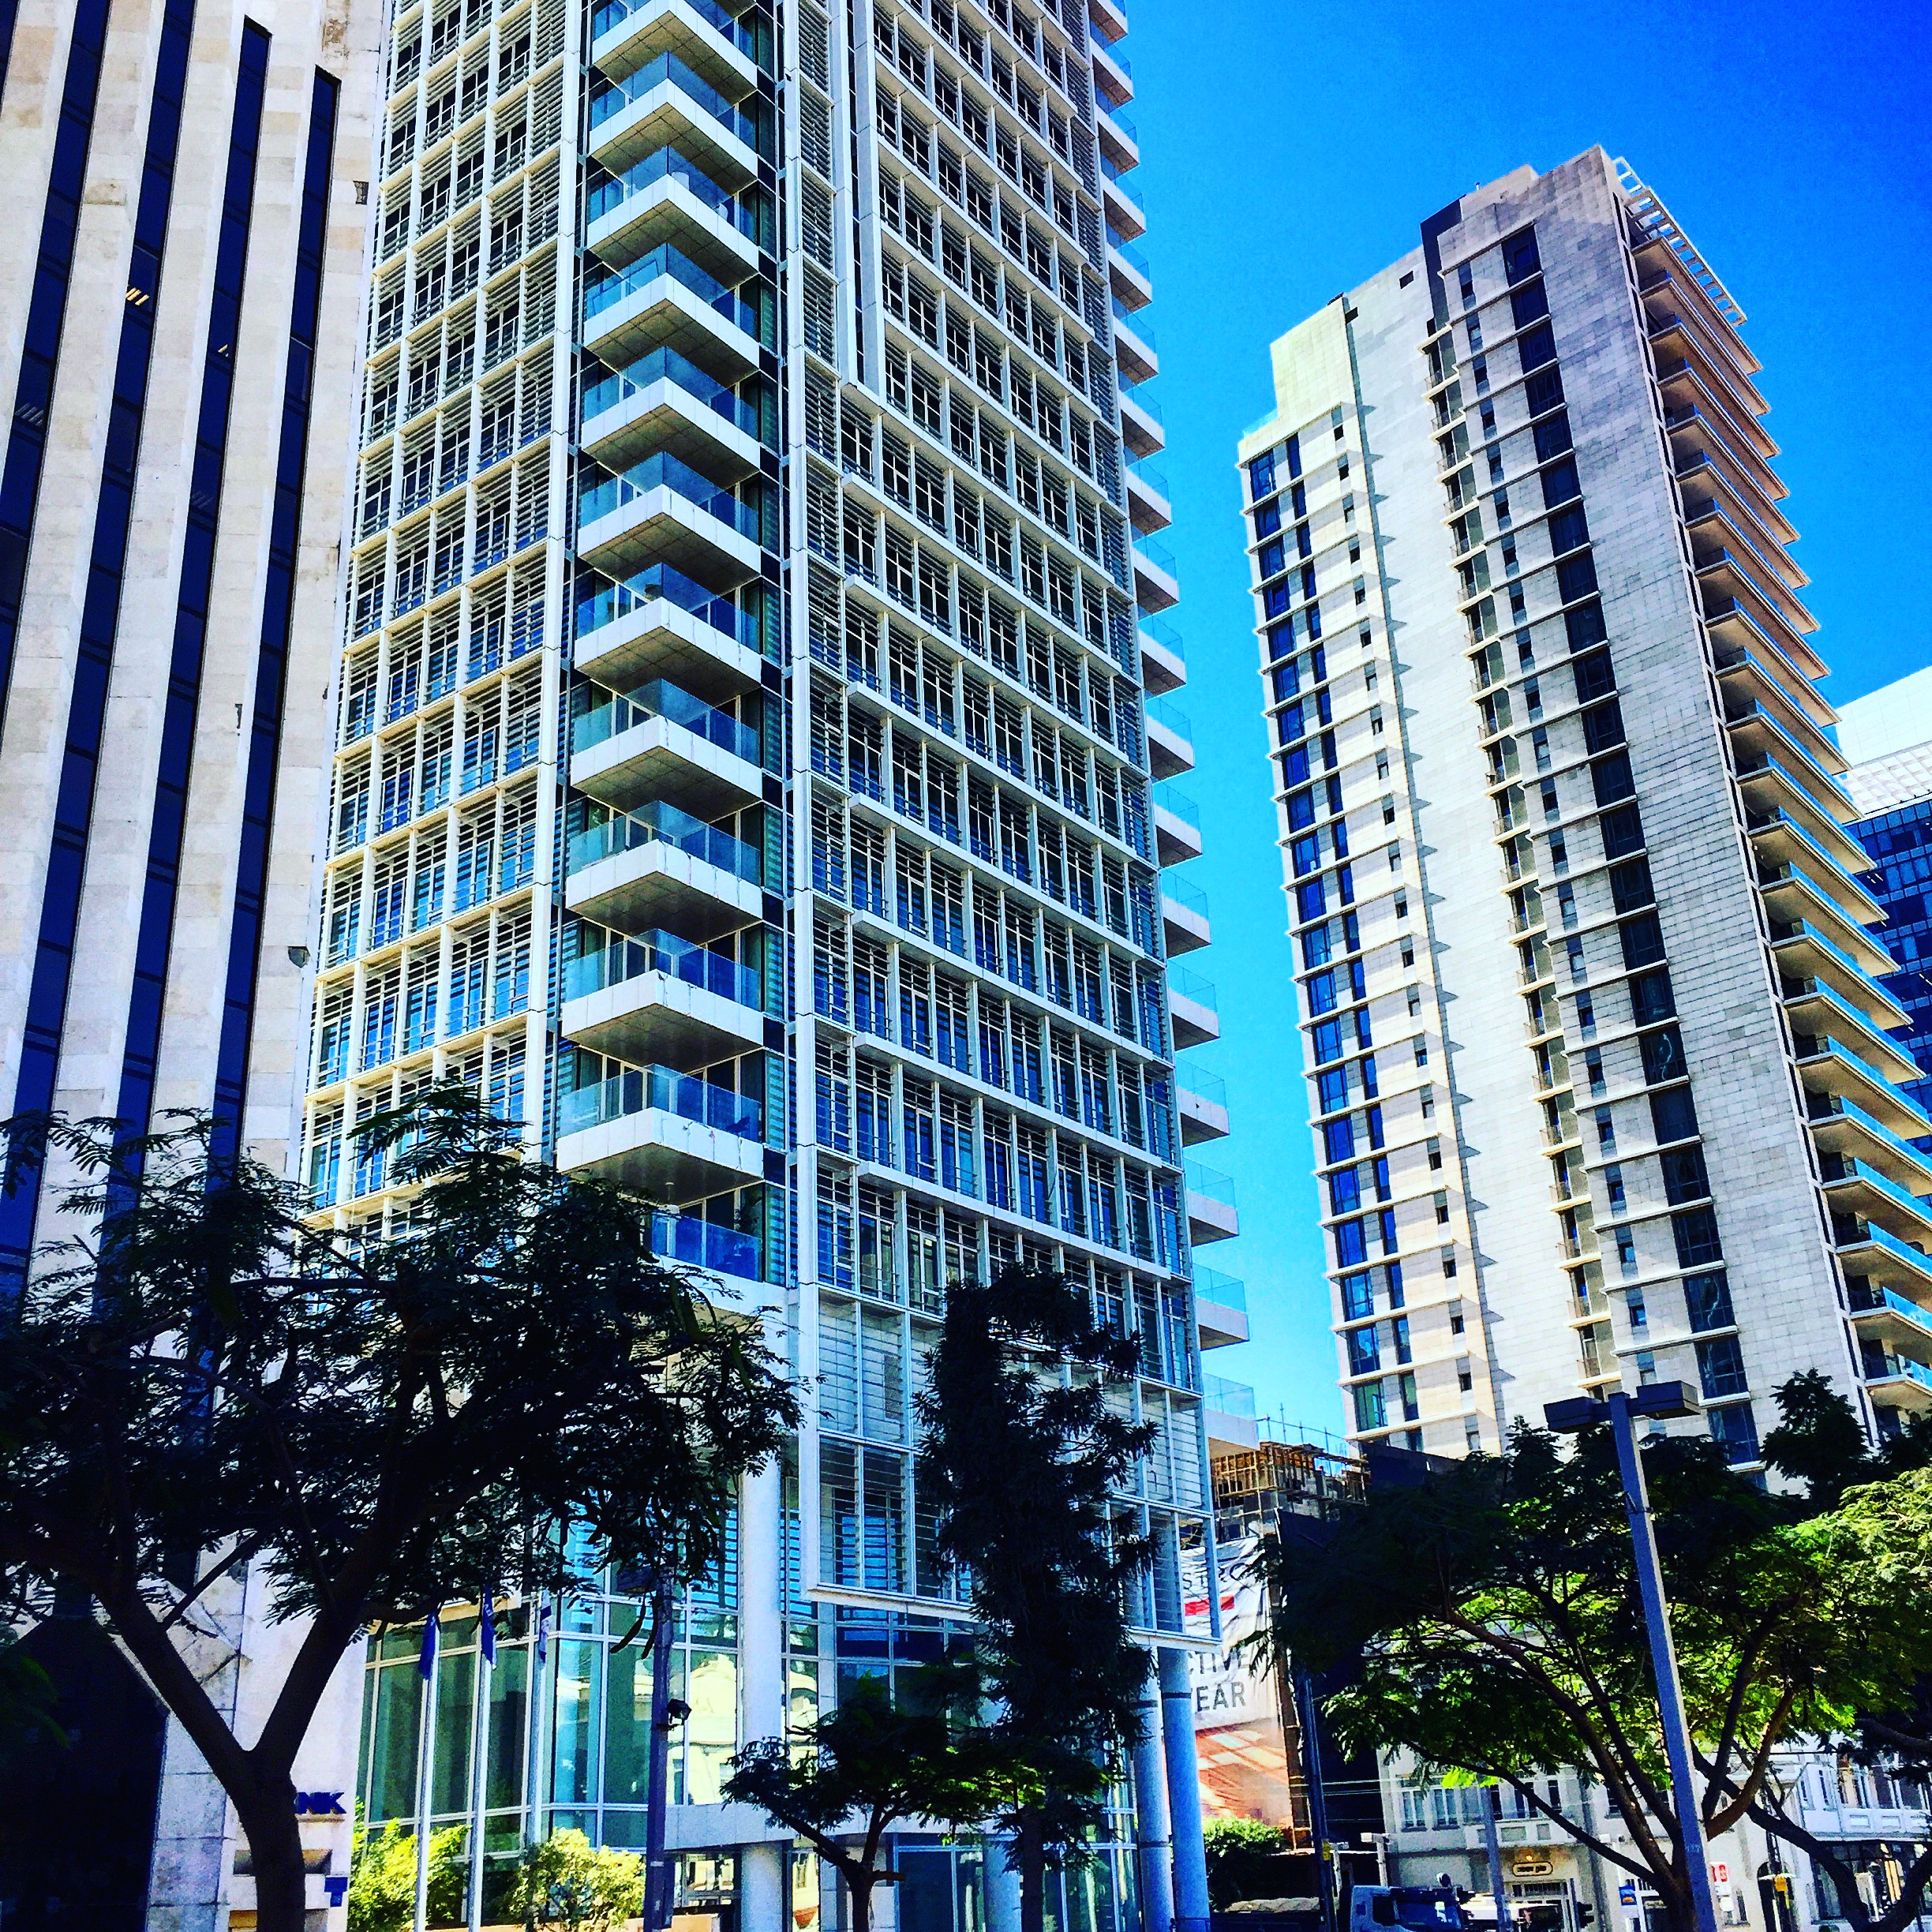 Tel Aviv Real Estate News | Israel's High Rise Boom